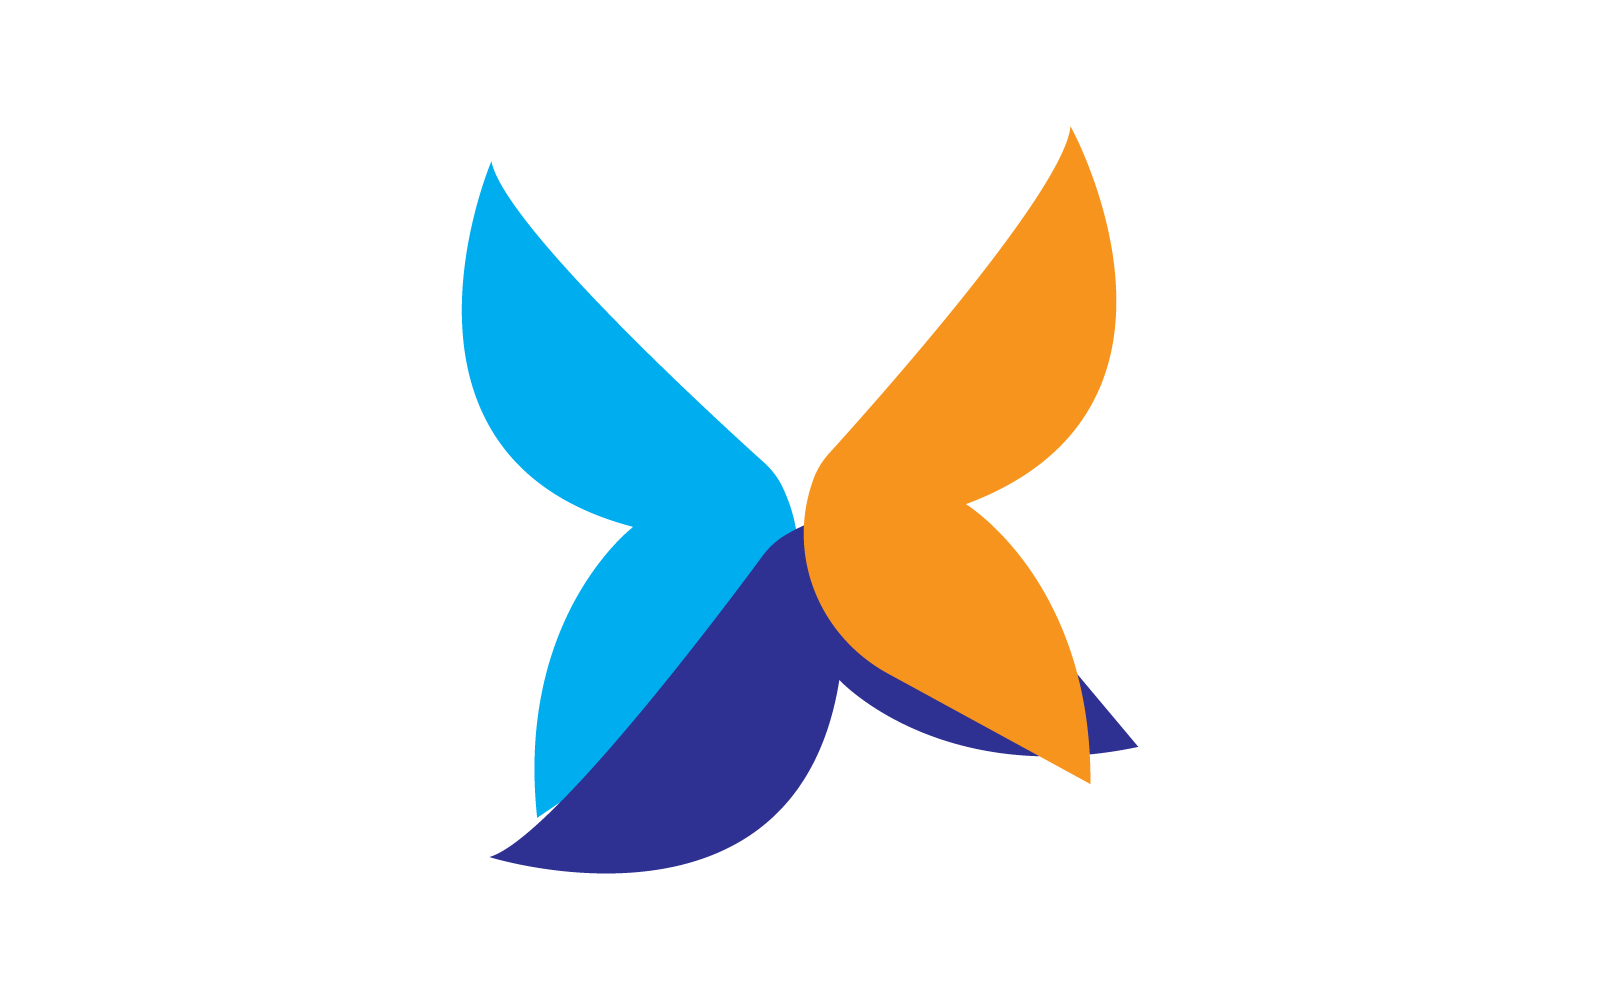 Butterfly illustration logo vector design